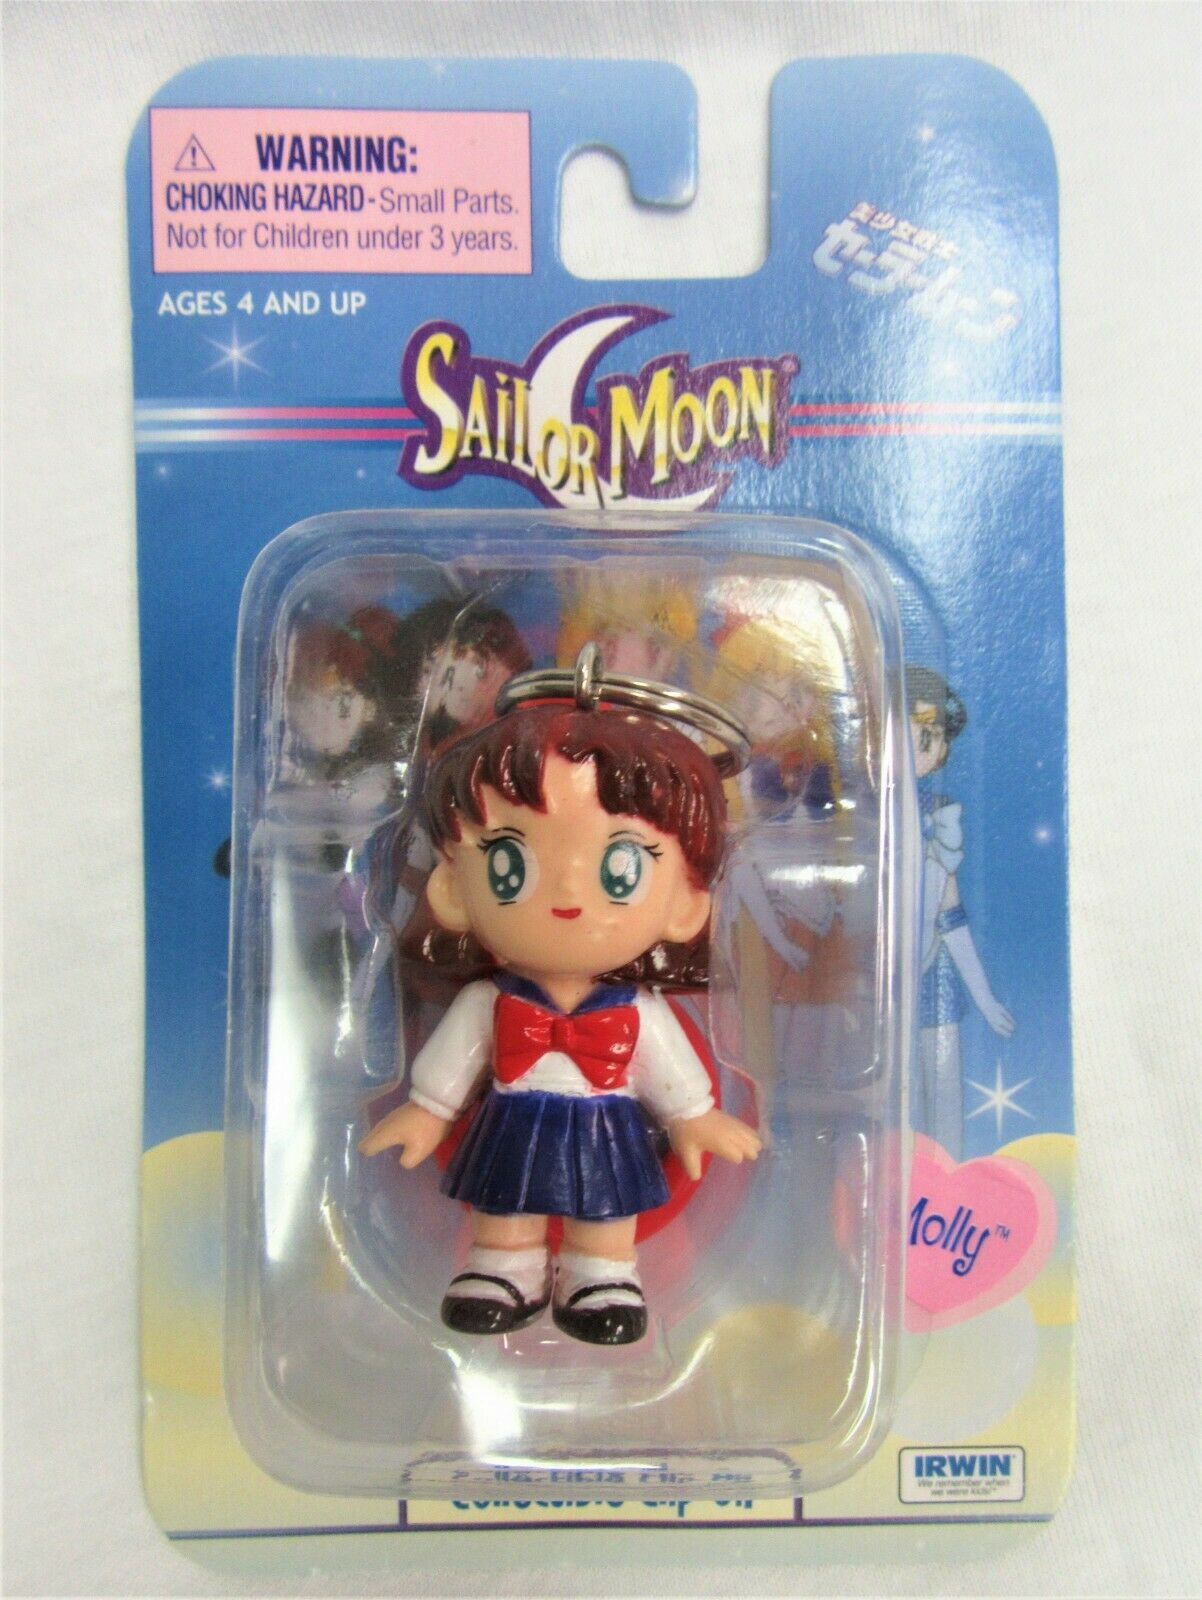 Vintage Collectible Toy, Sailor Moon Figural Collectible Clip-On, Molly - $11.71